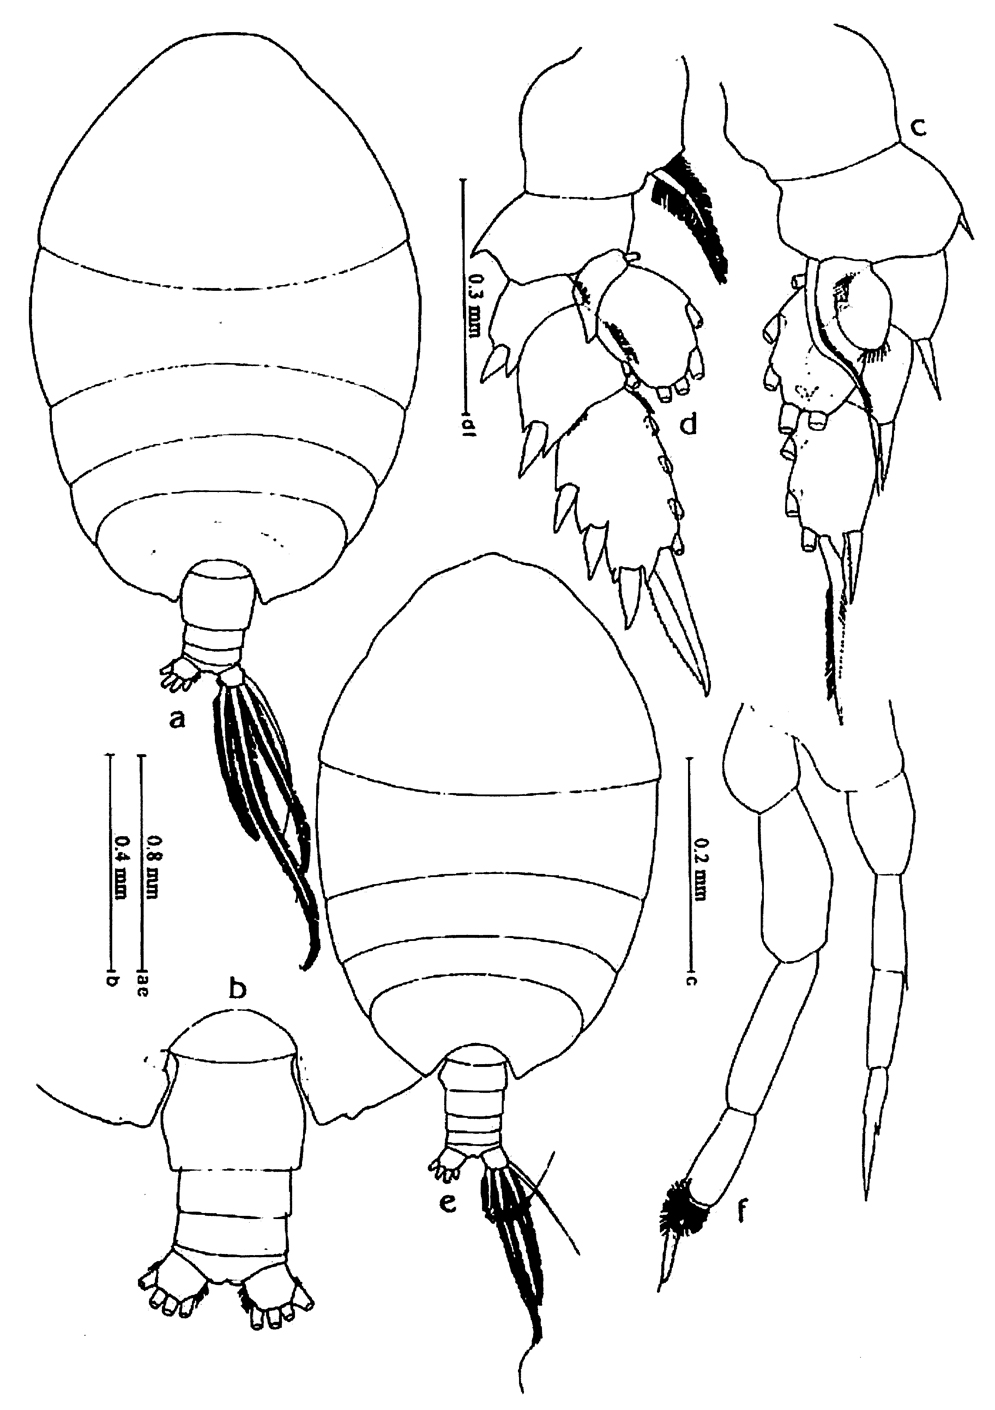 Species Phaenna spinifera - Plate 37 of morphological figures